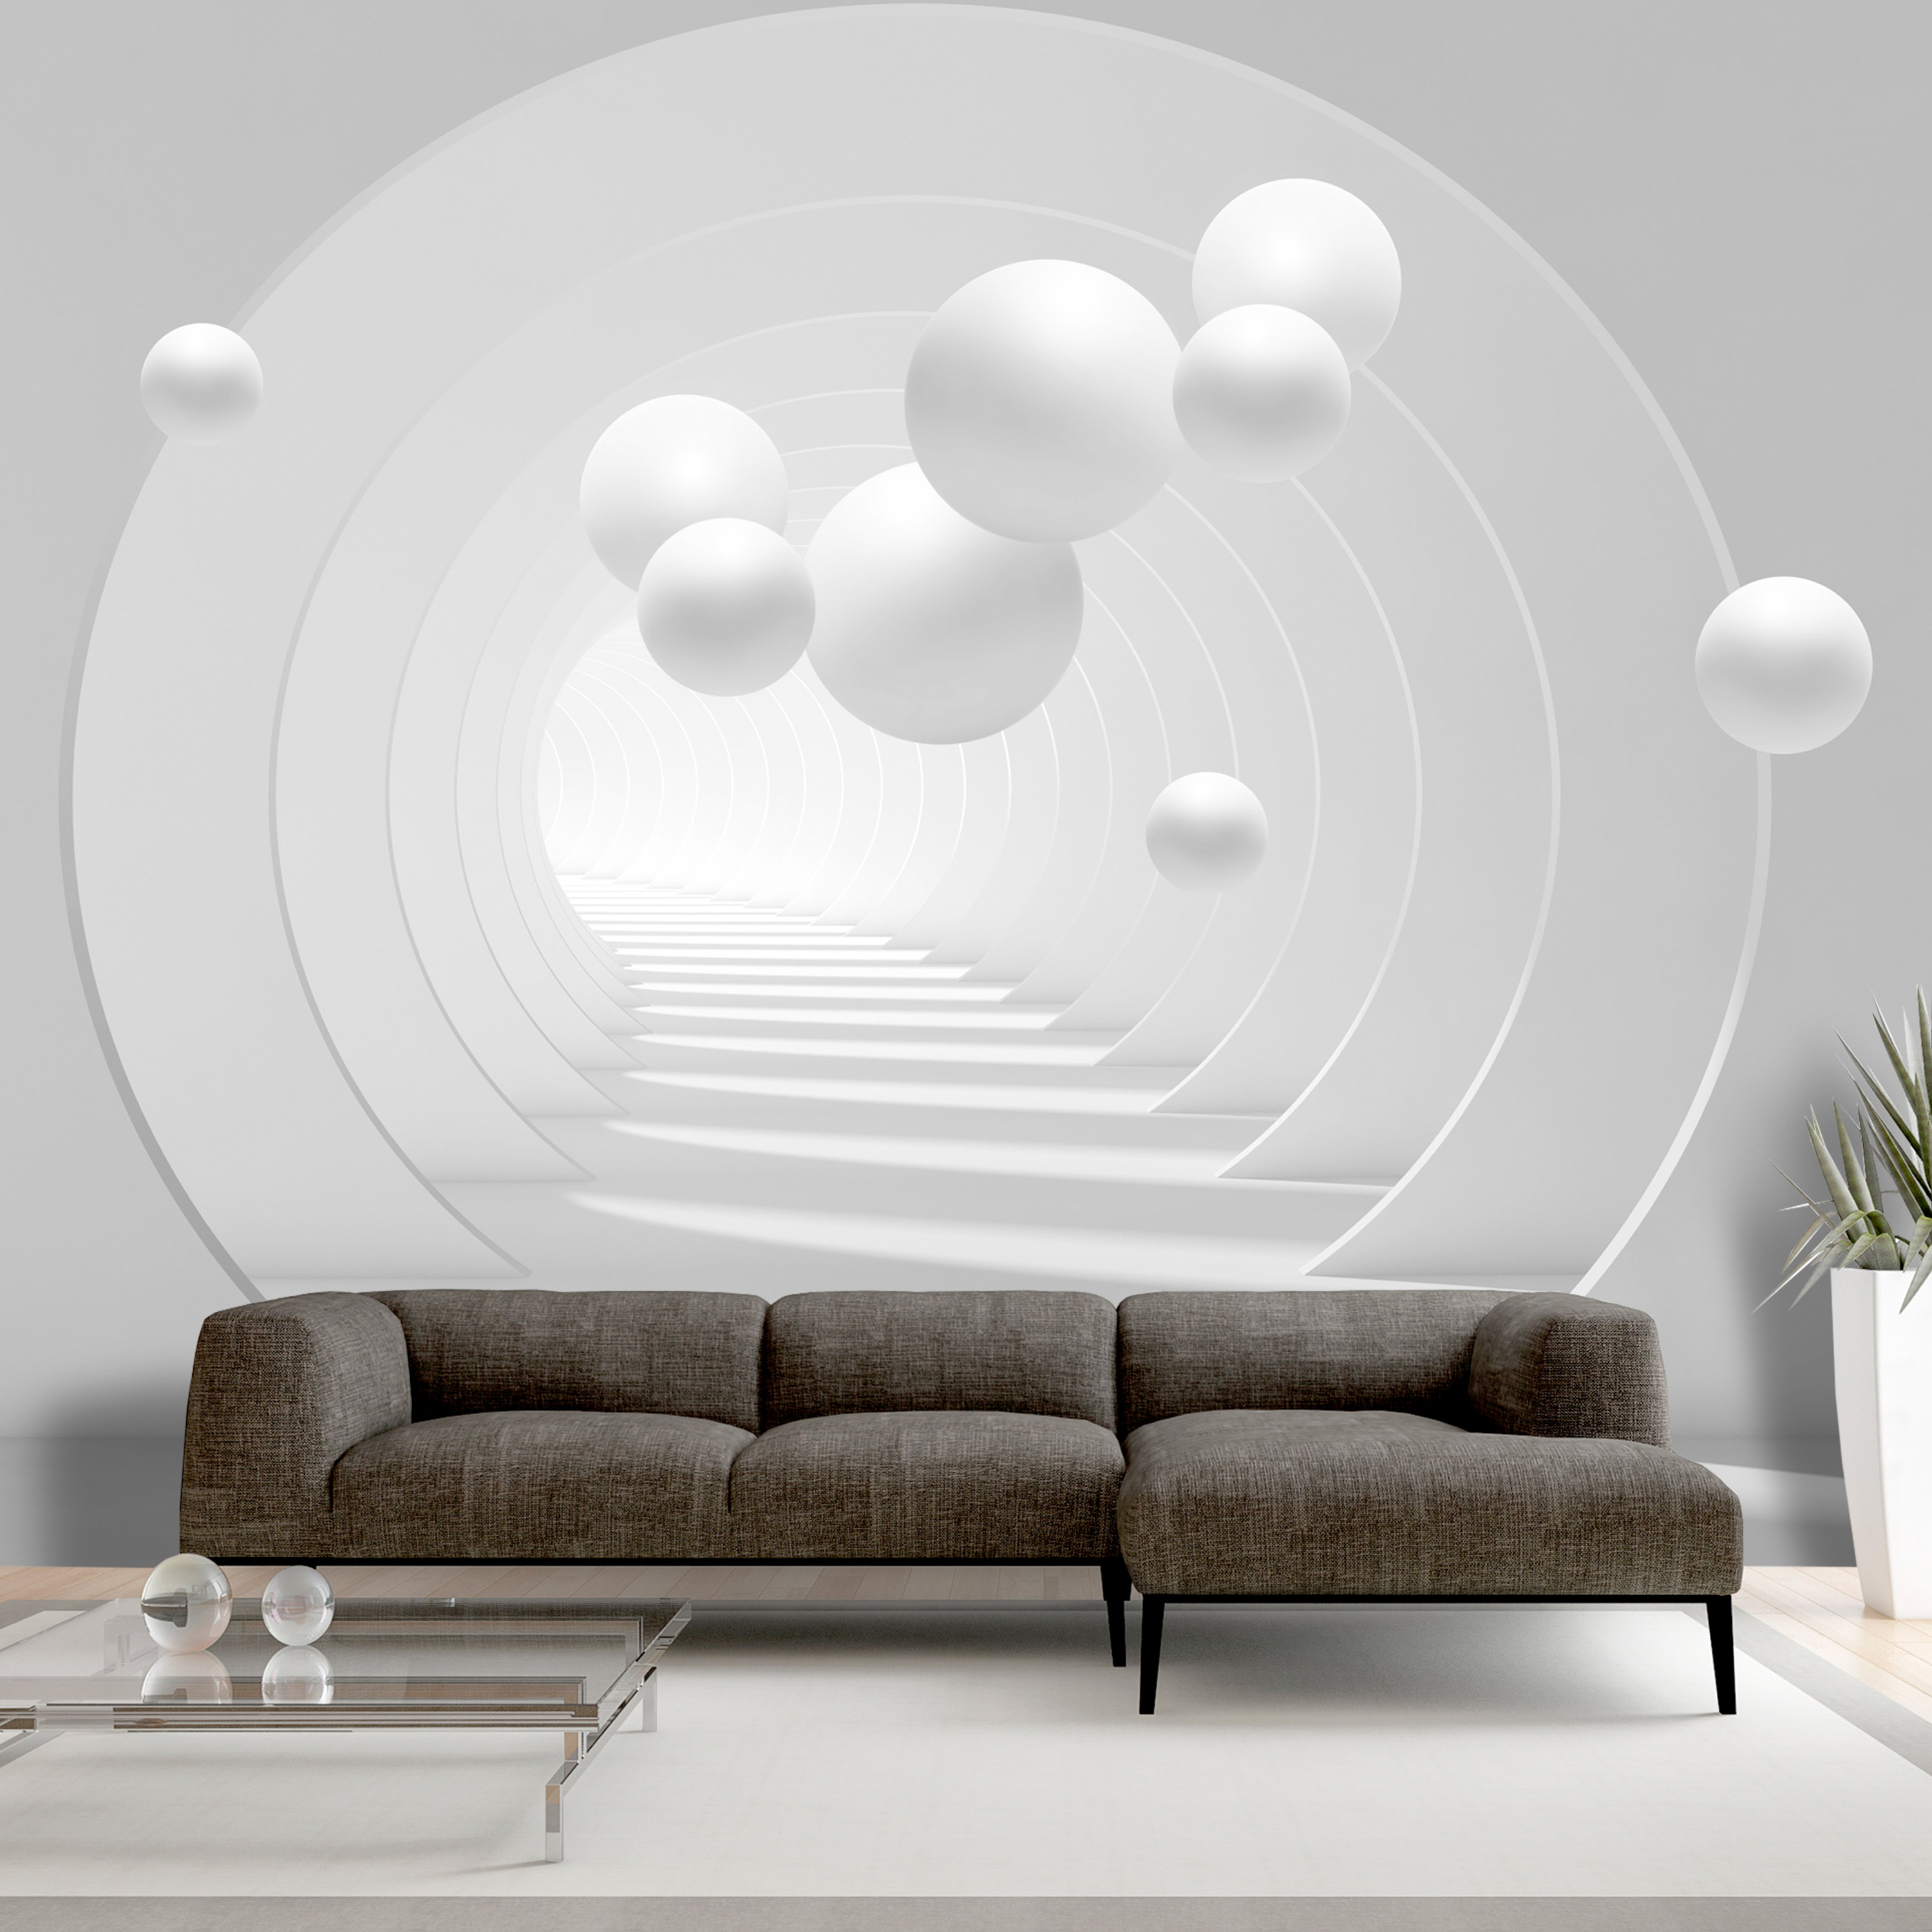 Self-adhesive Wallpaper - 3D Tunnel - 147x105